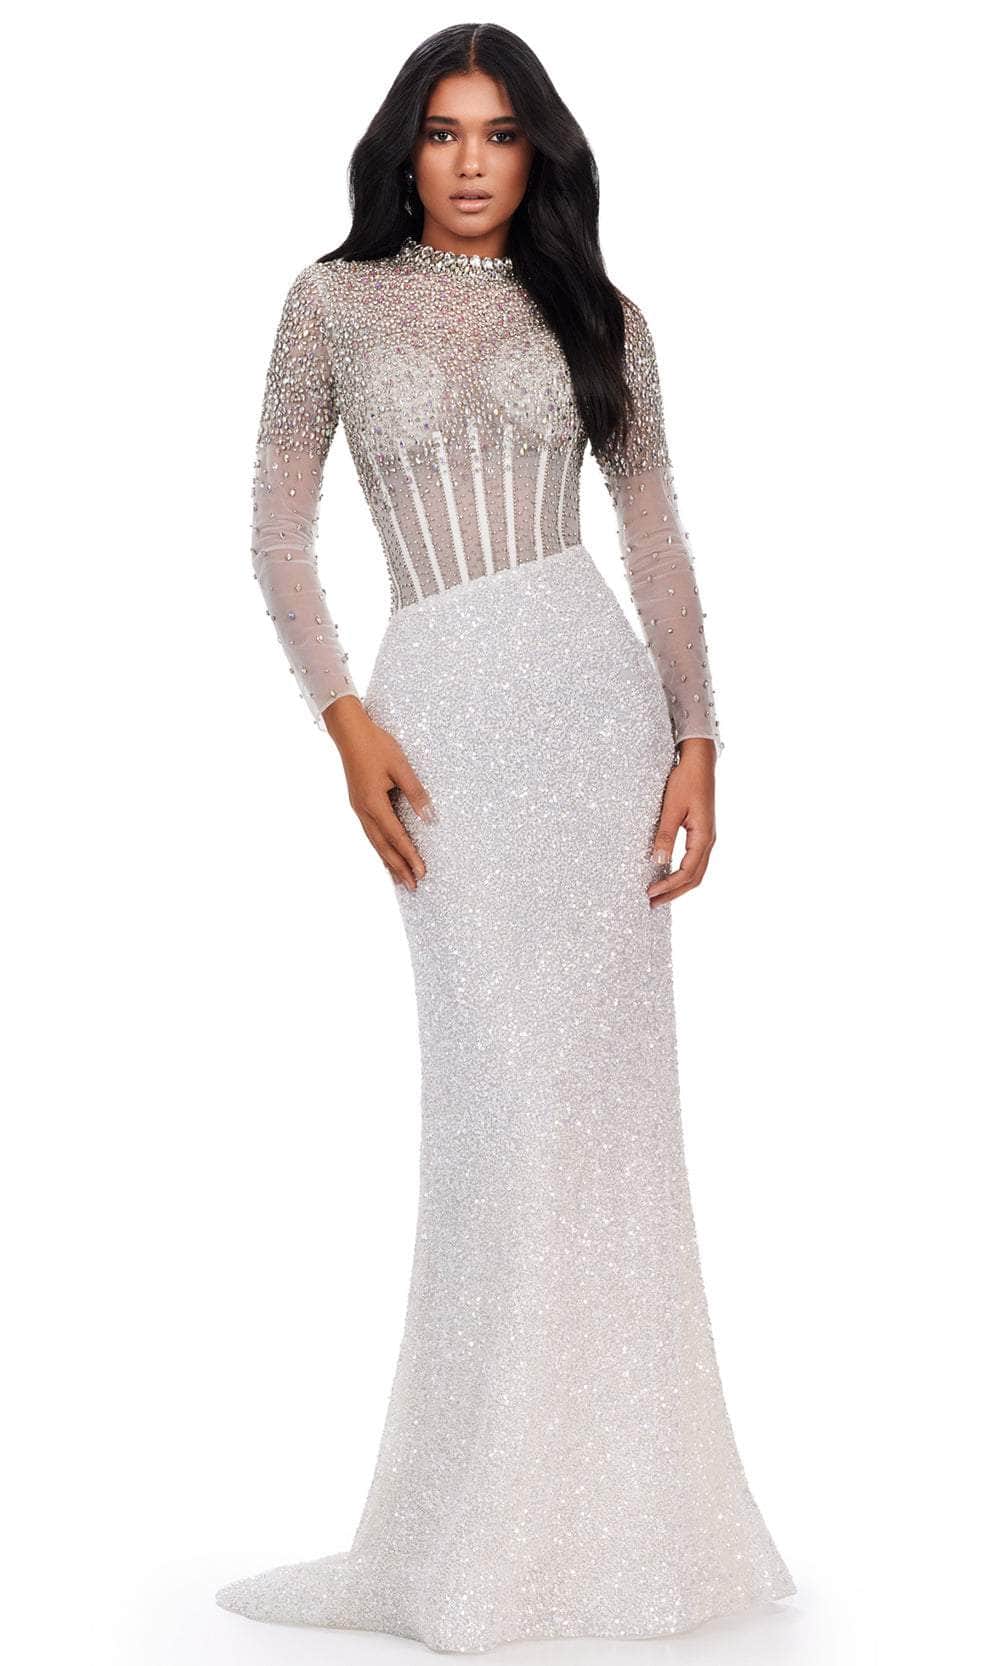 Ashley Lauren 11522 - Illusion Bustier Prom Dress
